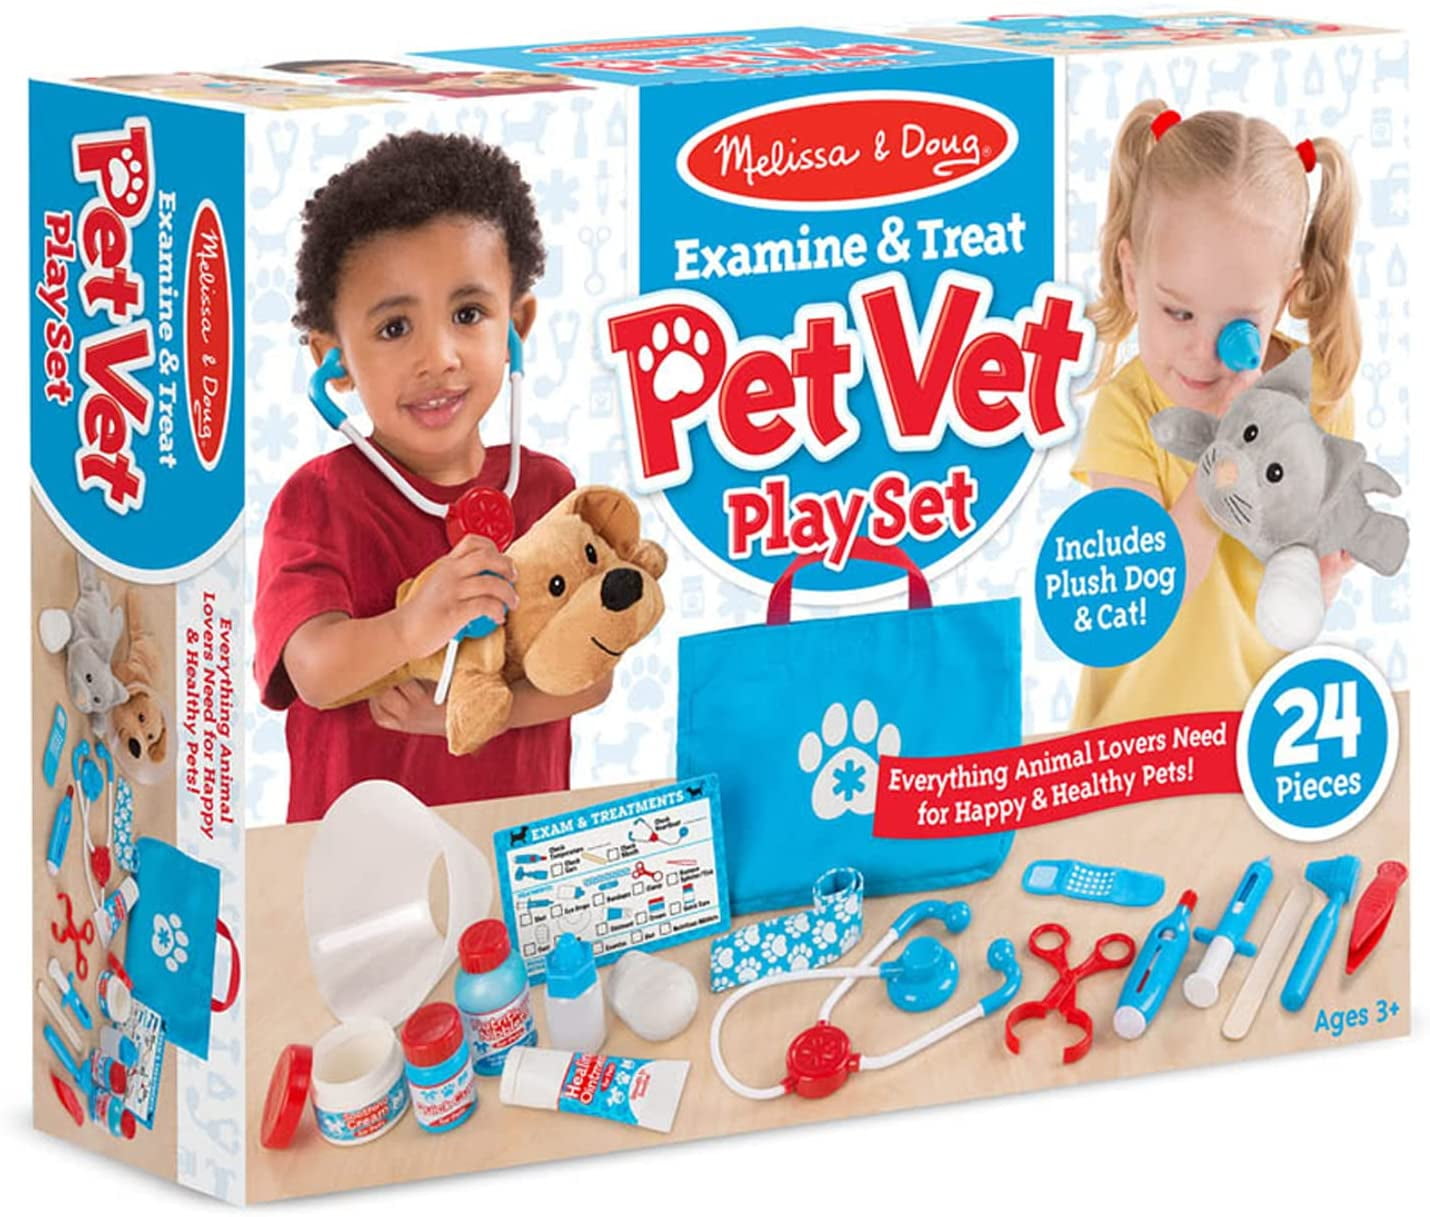 Melissa & Doug Examine & Treat Pet Vet Play Set Animal & People Play Sets, Helps Children Develop Empathy, 24 Pieces, 26.67 cm H x 34.29 cm W x 8.89 cm L